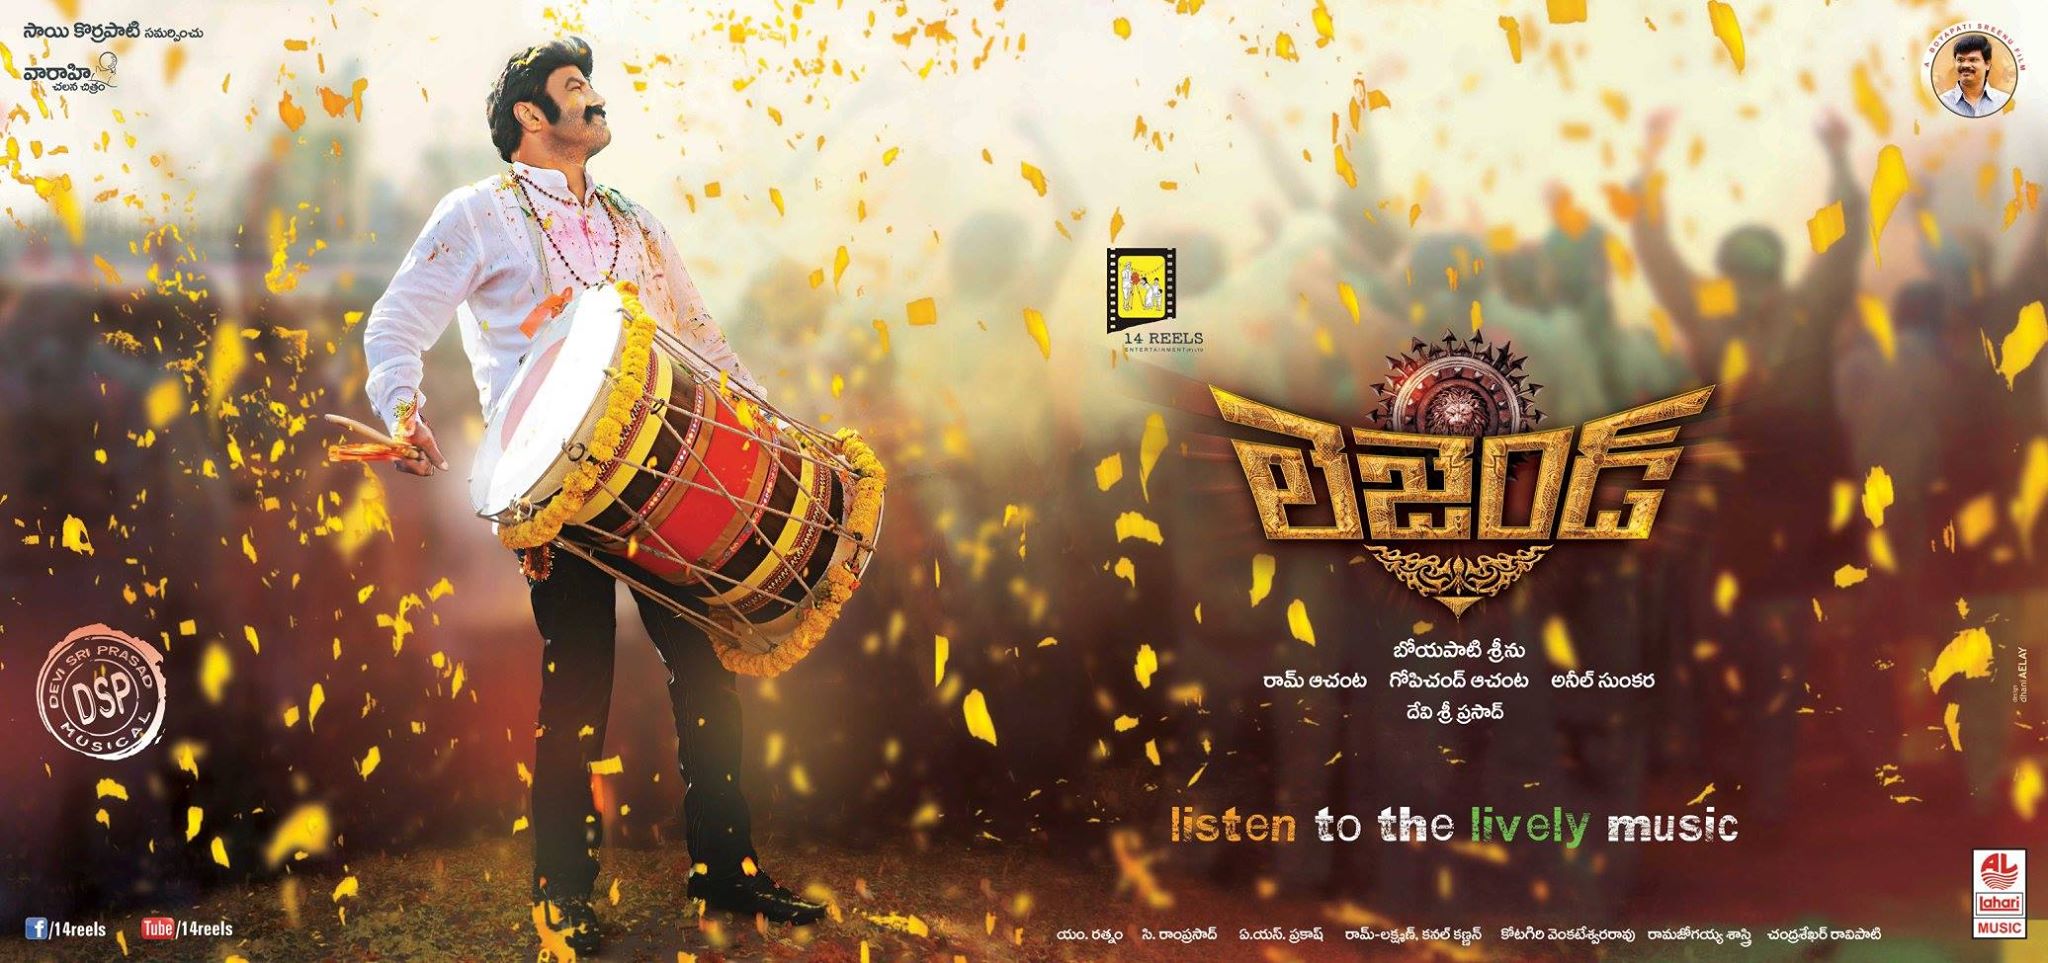 Legend Telugu Movie 2014 Reviews, Cast Release